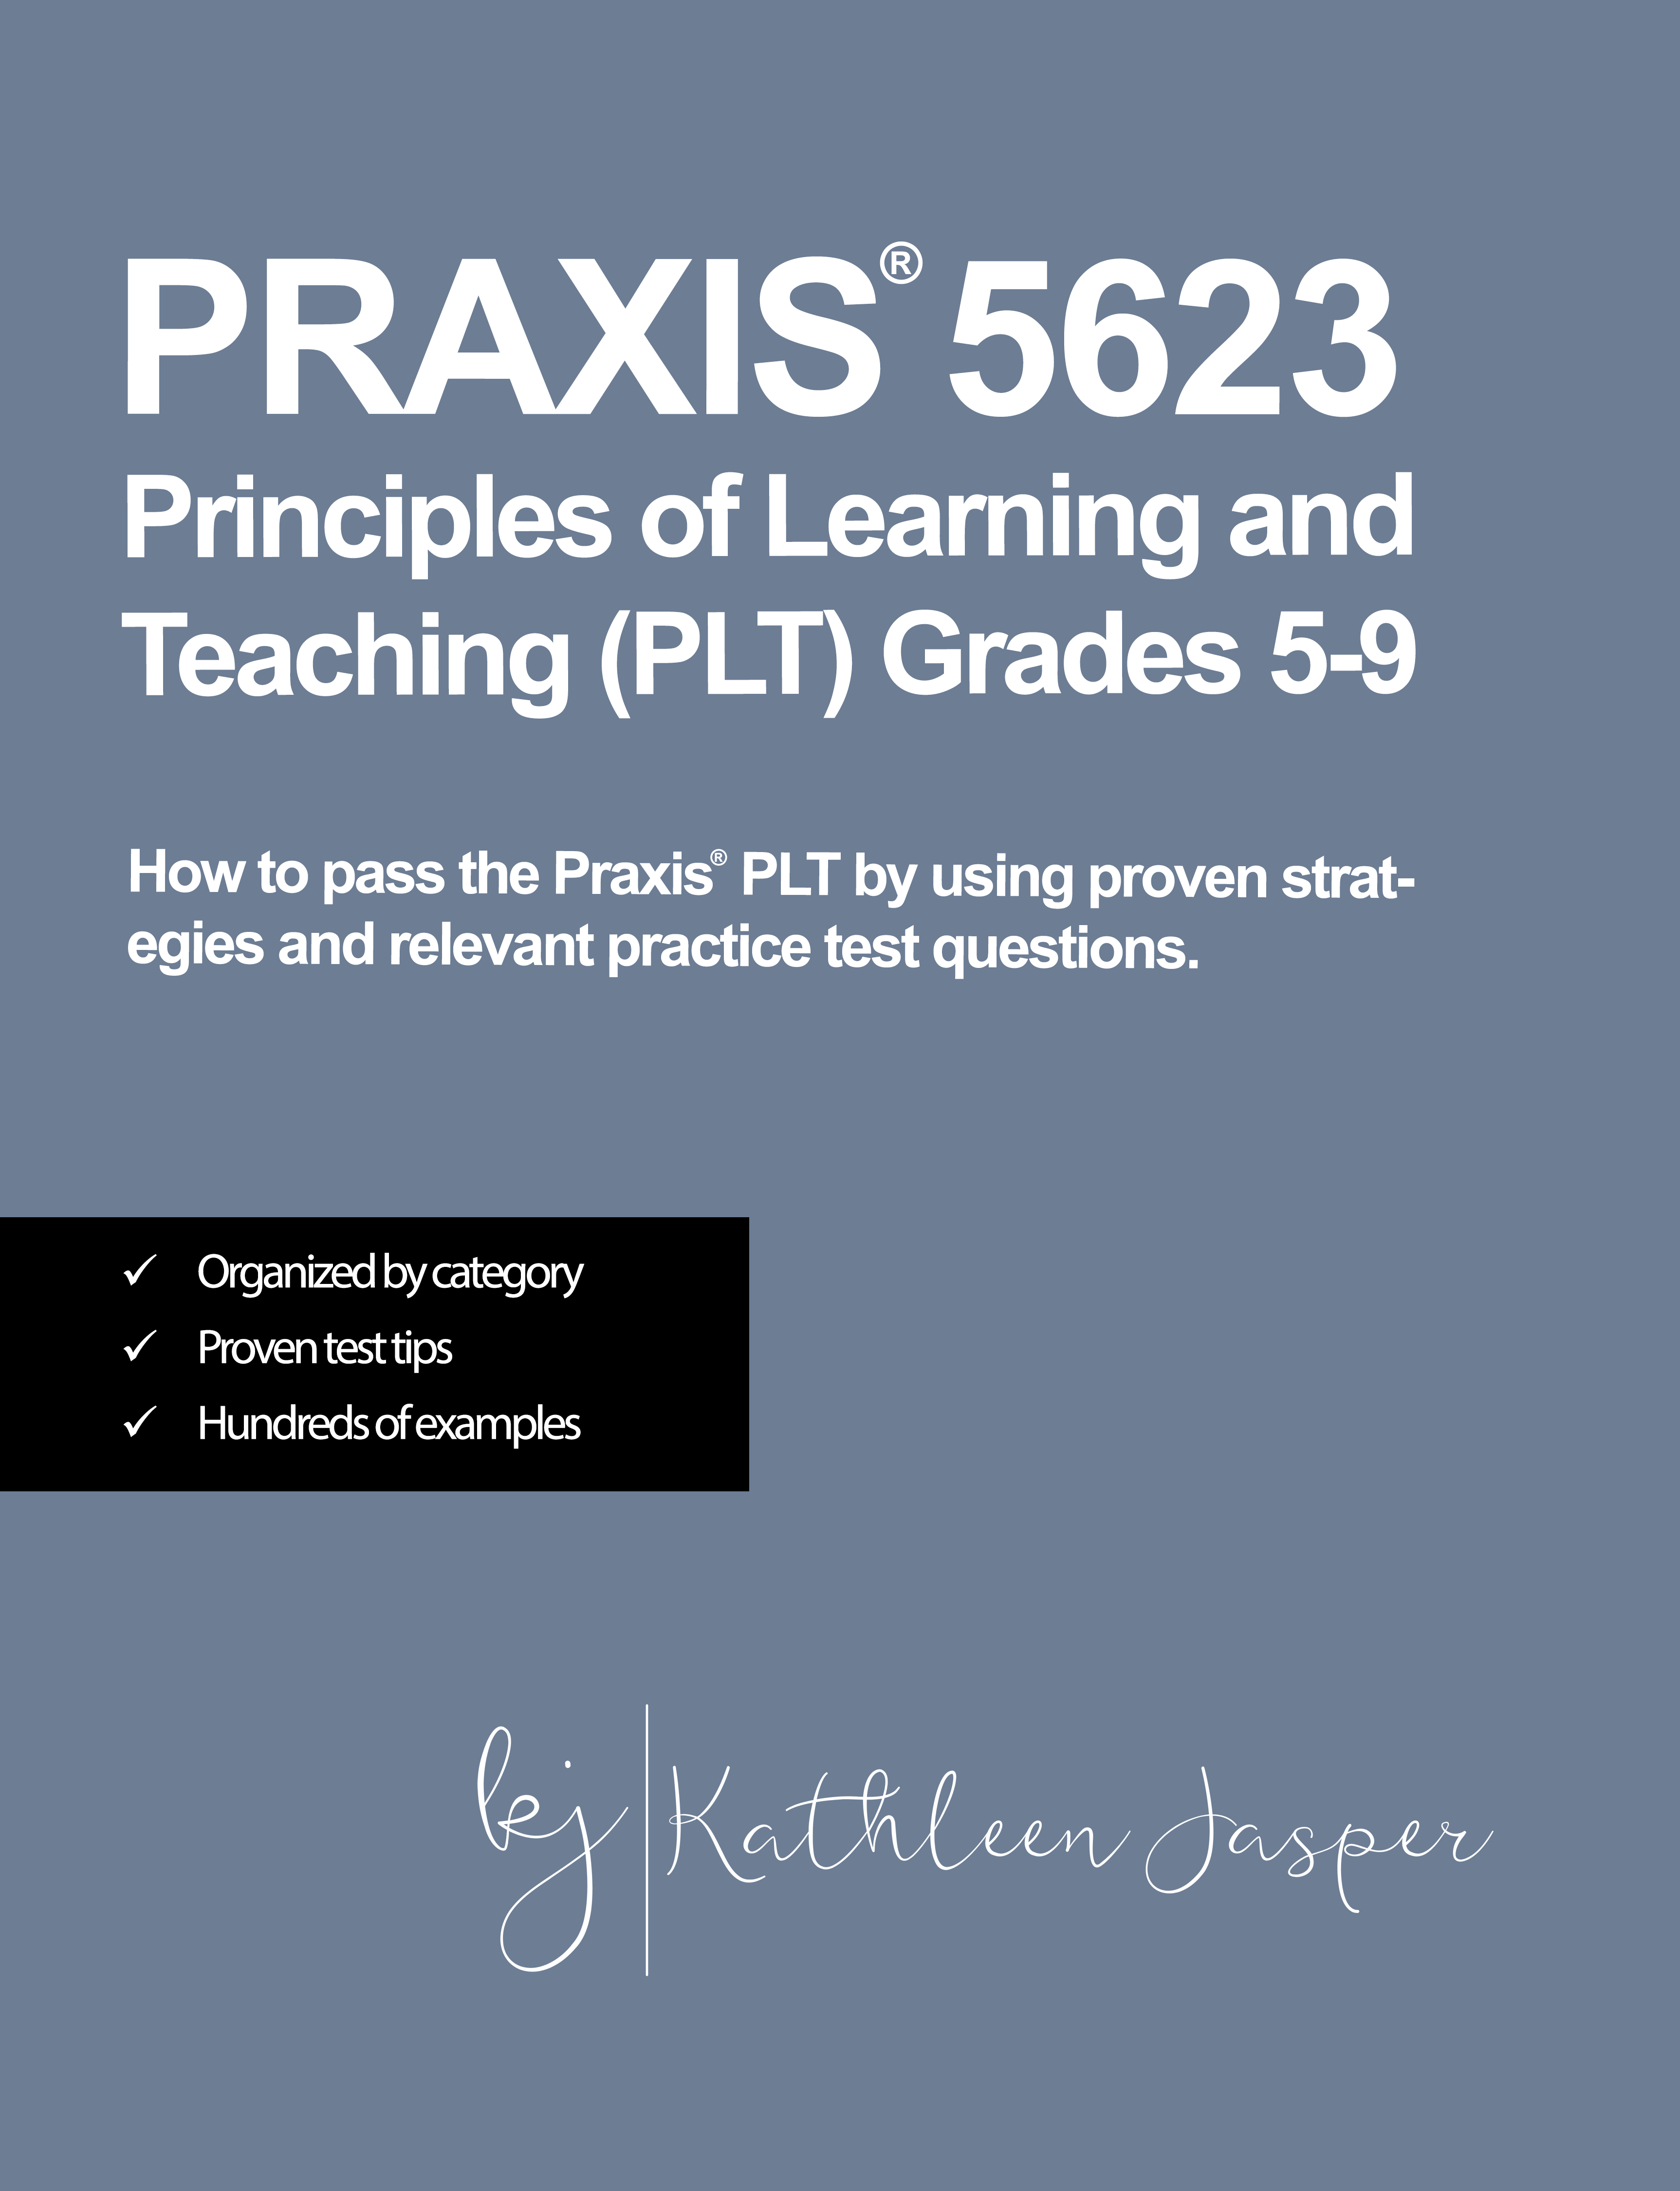 Praxis PLT Digital Study Guides - Digital